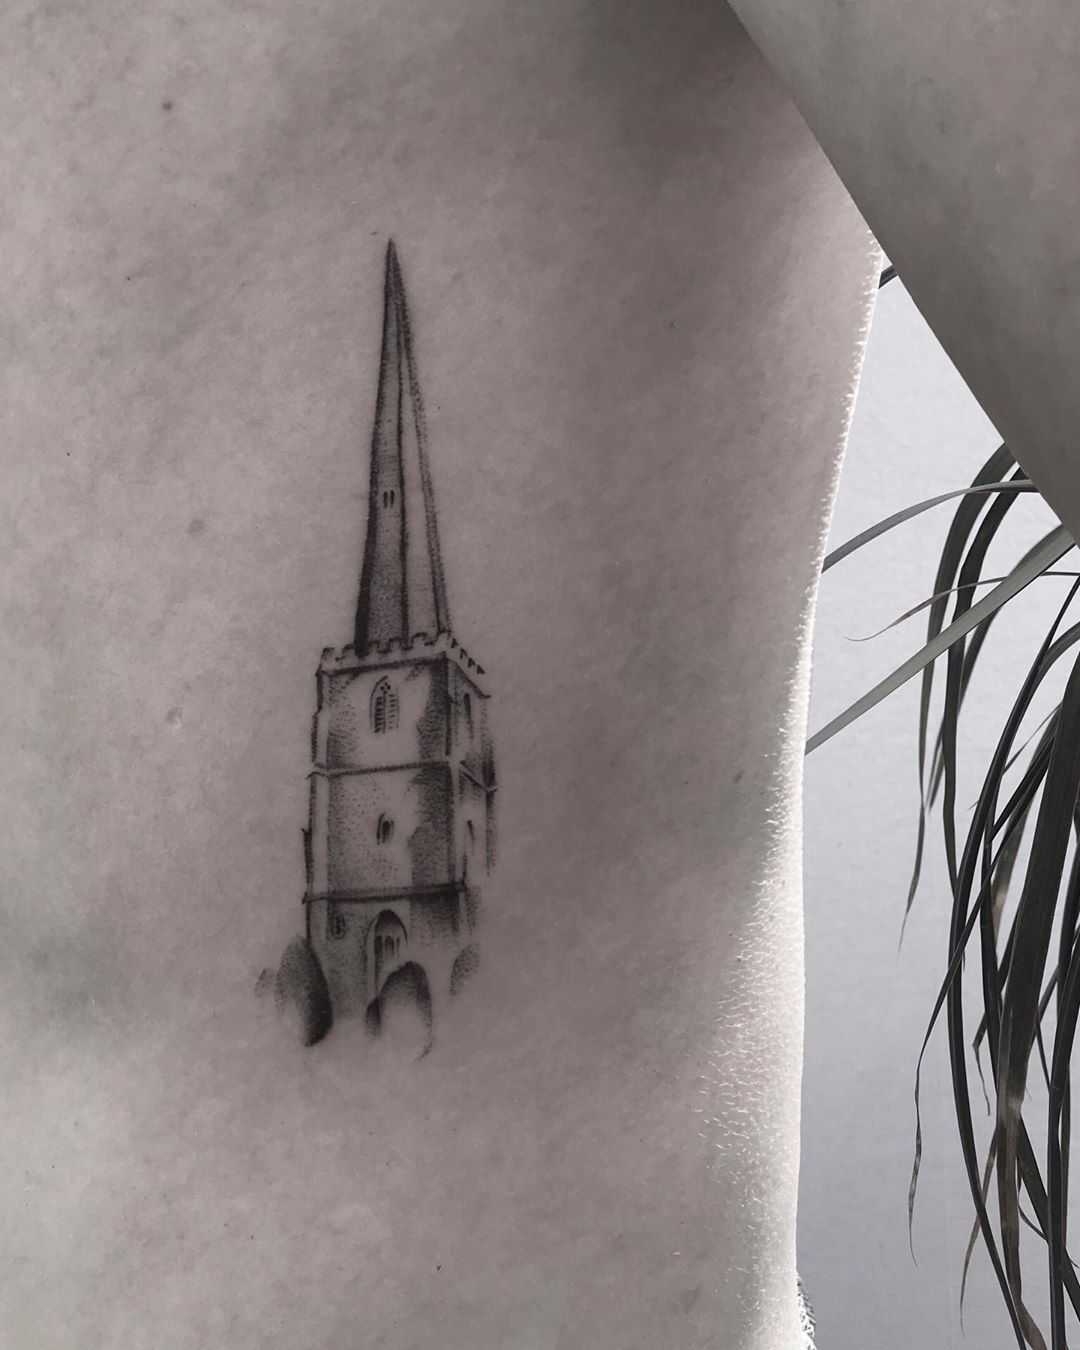 Church steeple tattoo by Oscar Jesus